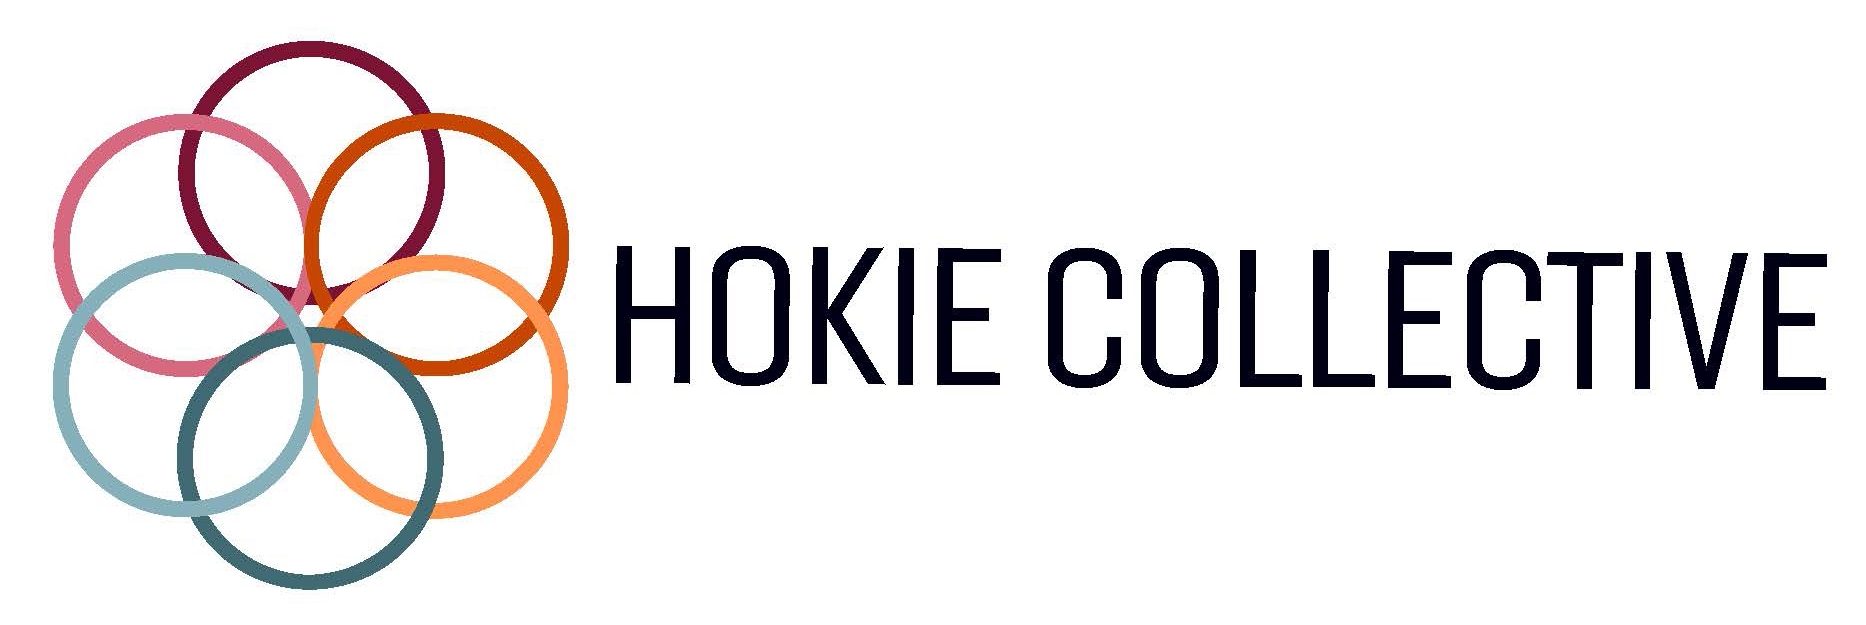 Hokie Collective Logo